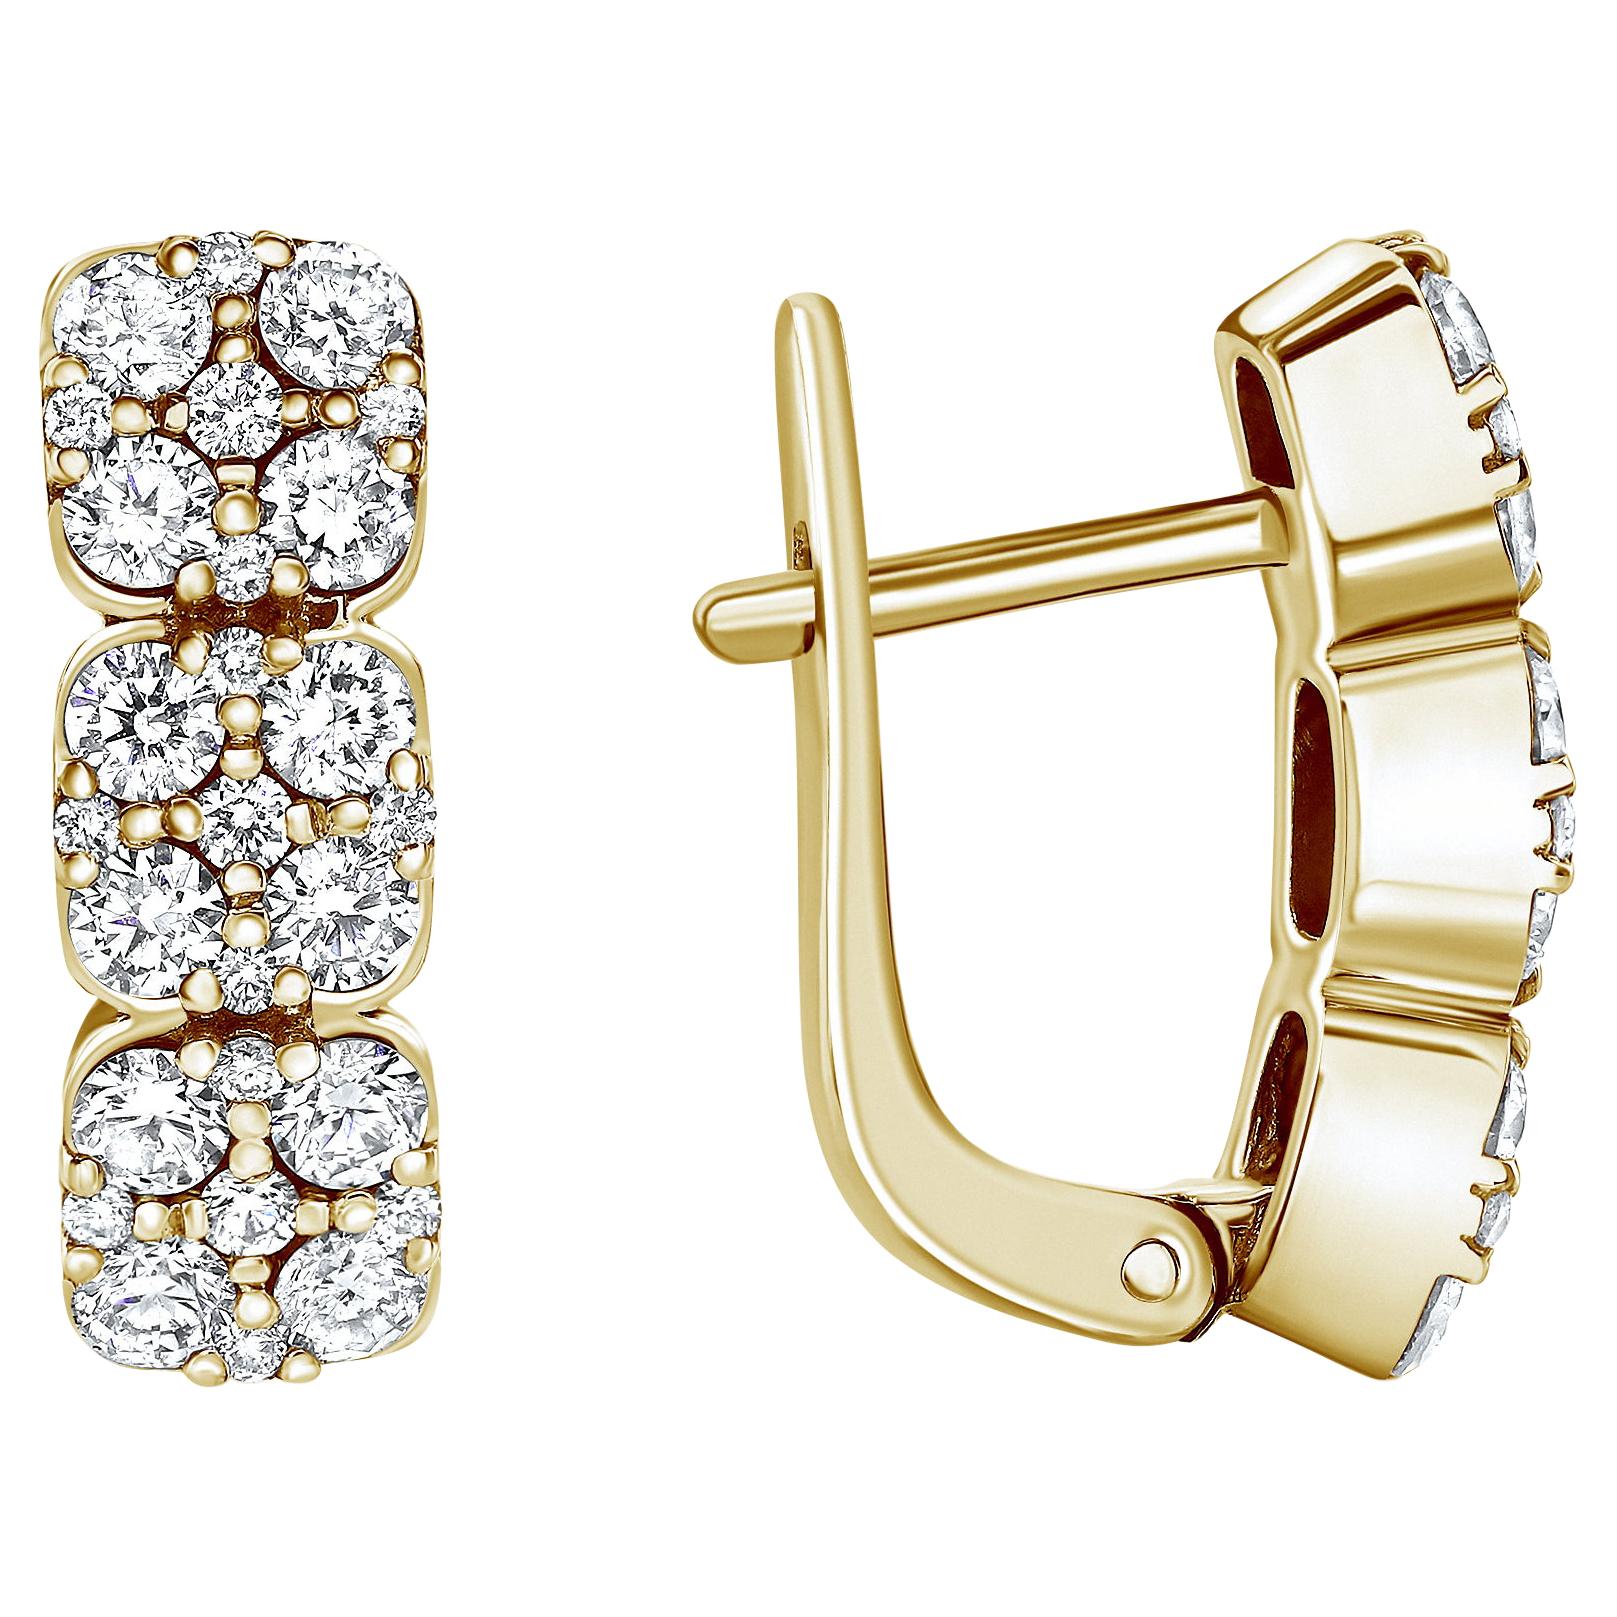 1.19 Carat Round Diamond Earrings in 14k Yellow Gold, Shlomit Rogel For Sale